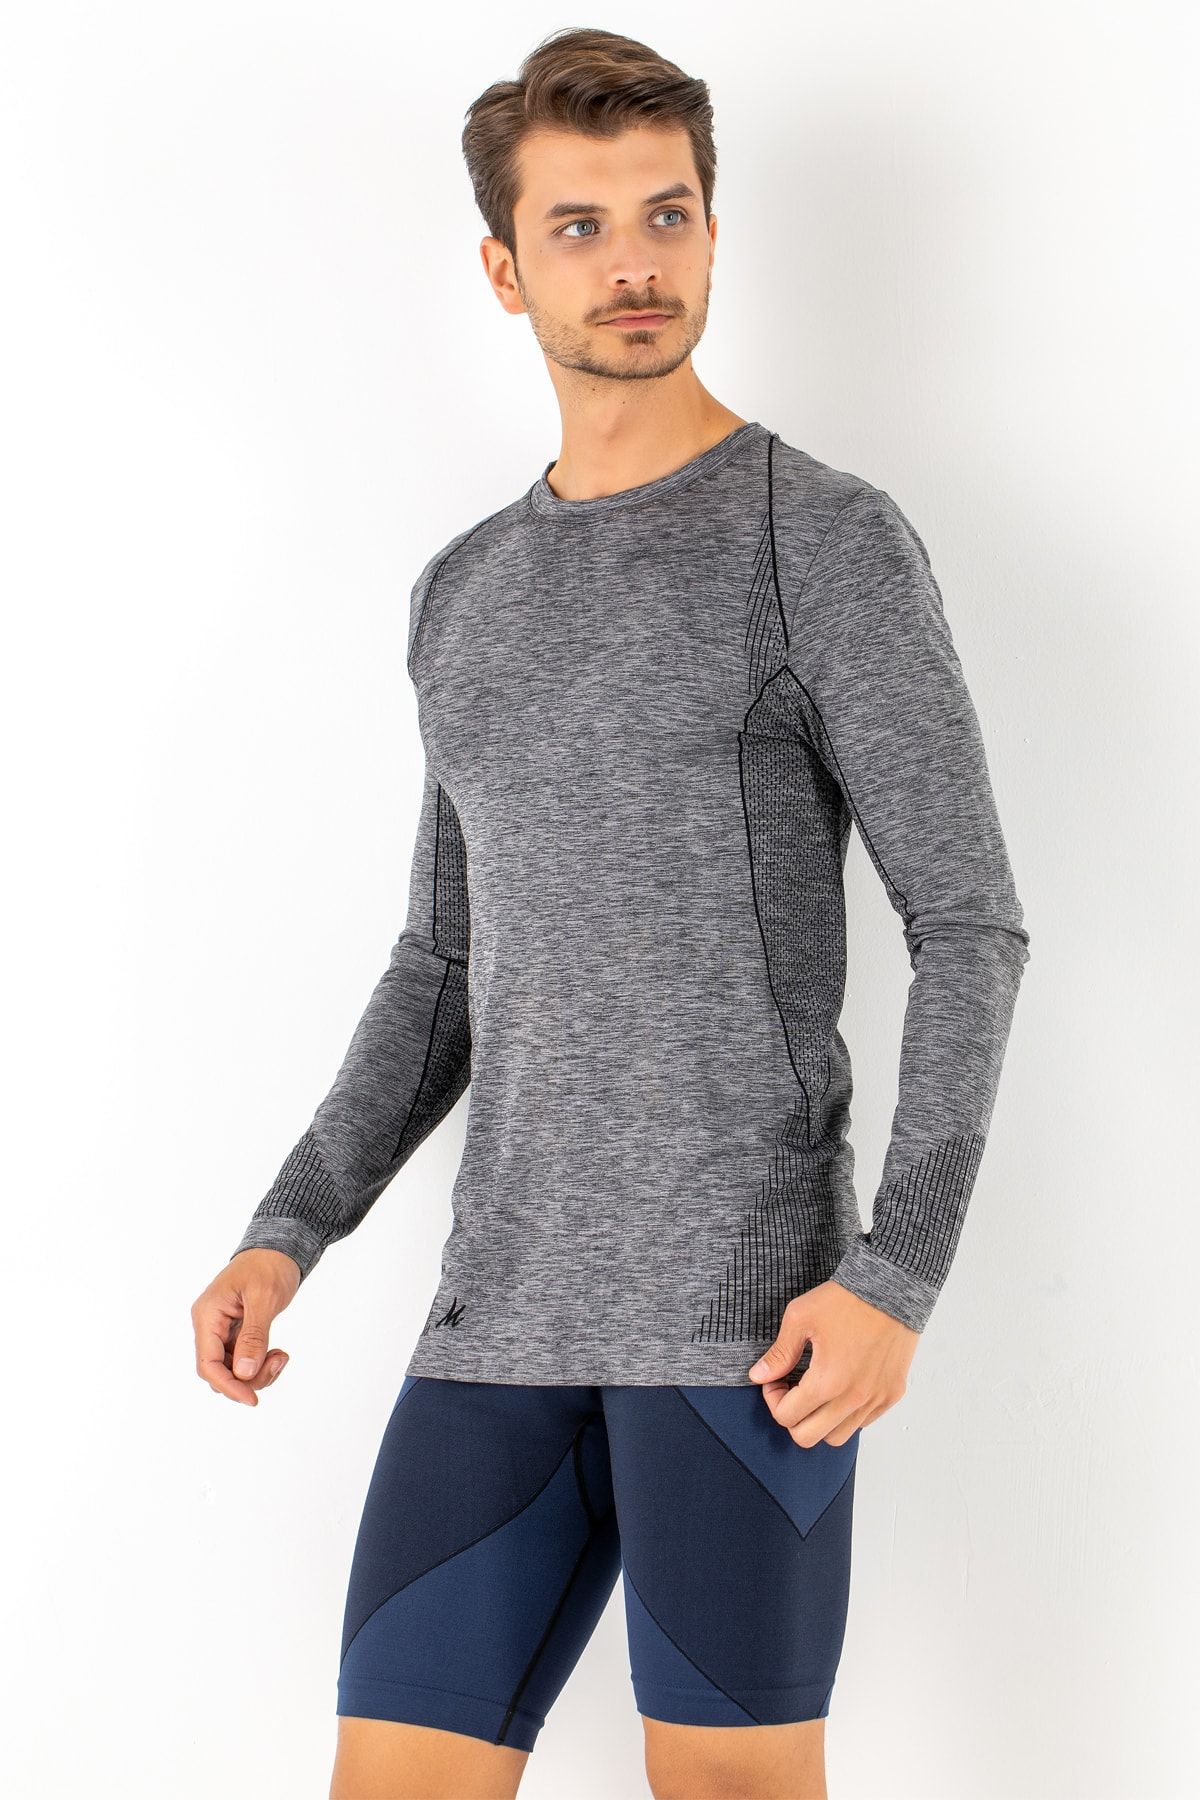 MioFit Erkek Active Wear Uzun Kollu Spor T-Shirt